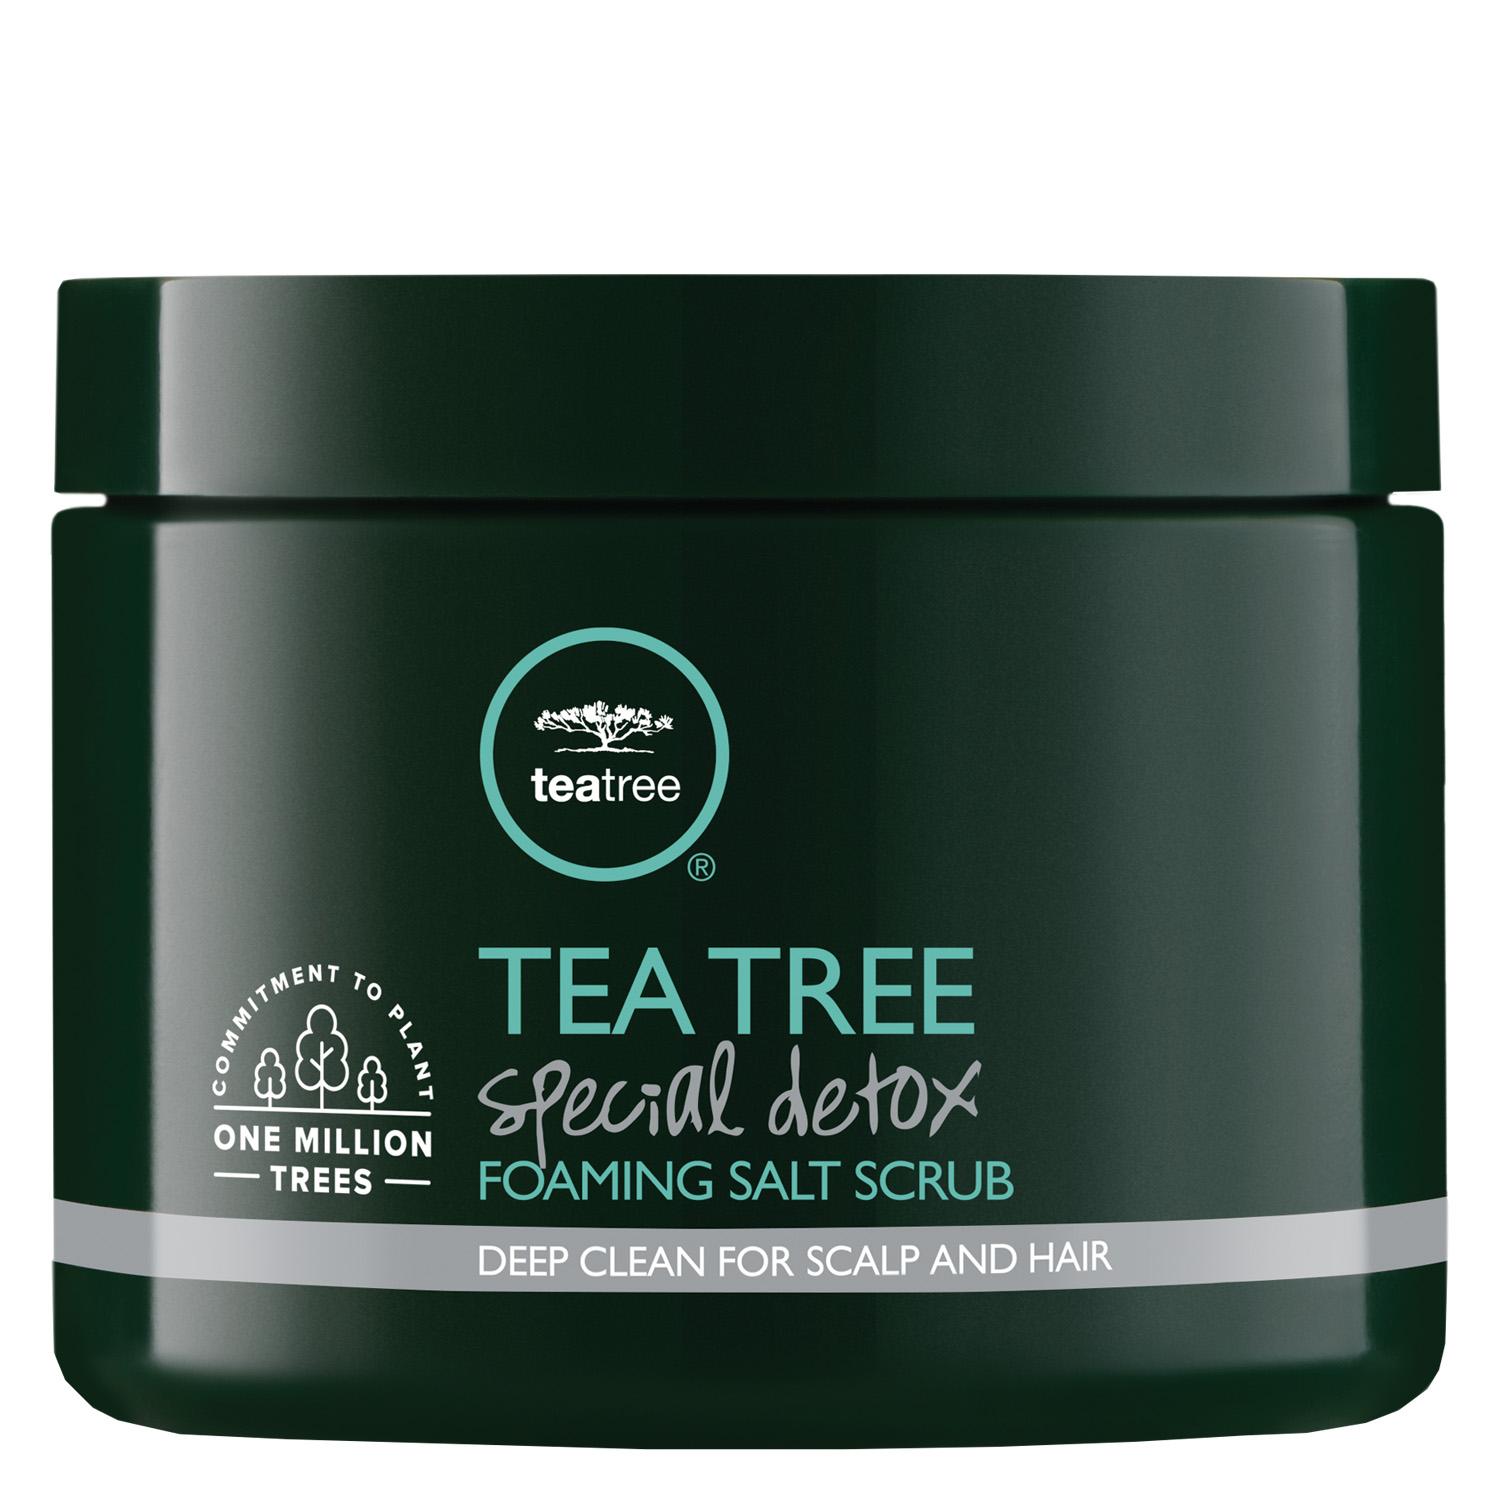 Tea Tree Special - Detox Foaming Salt Scrub